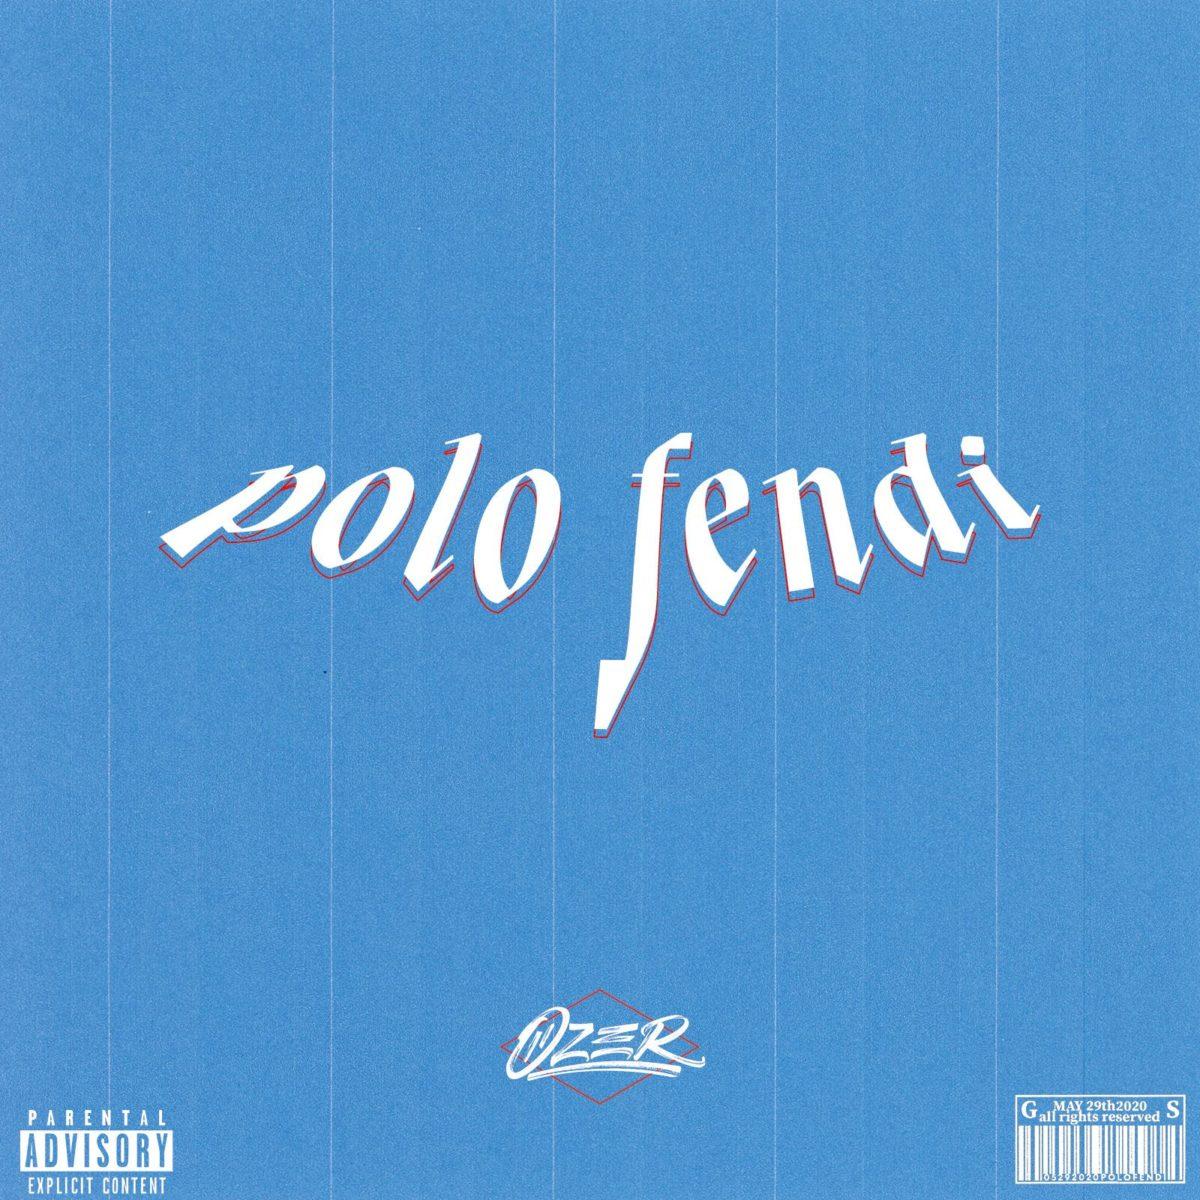 San Francisco’s Ozer Release “Polo Fendi” featuring Scion Rae